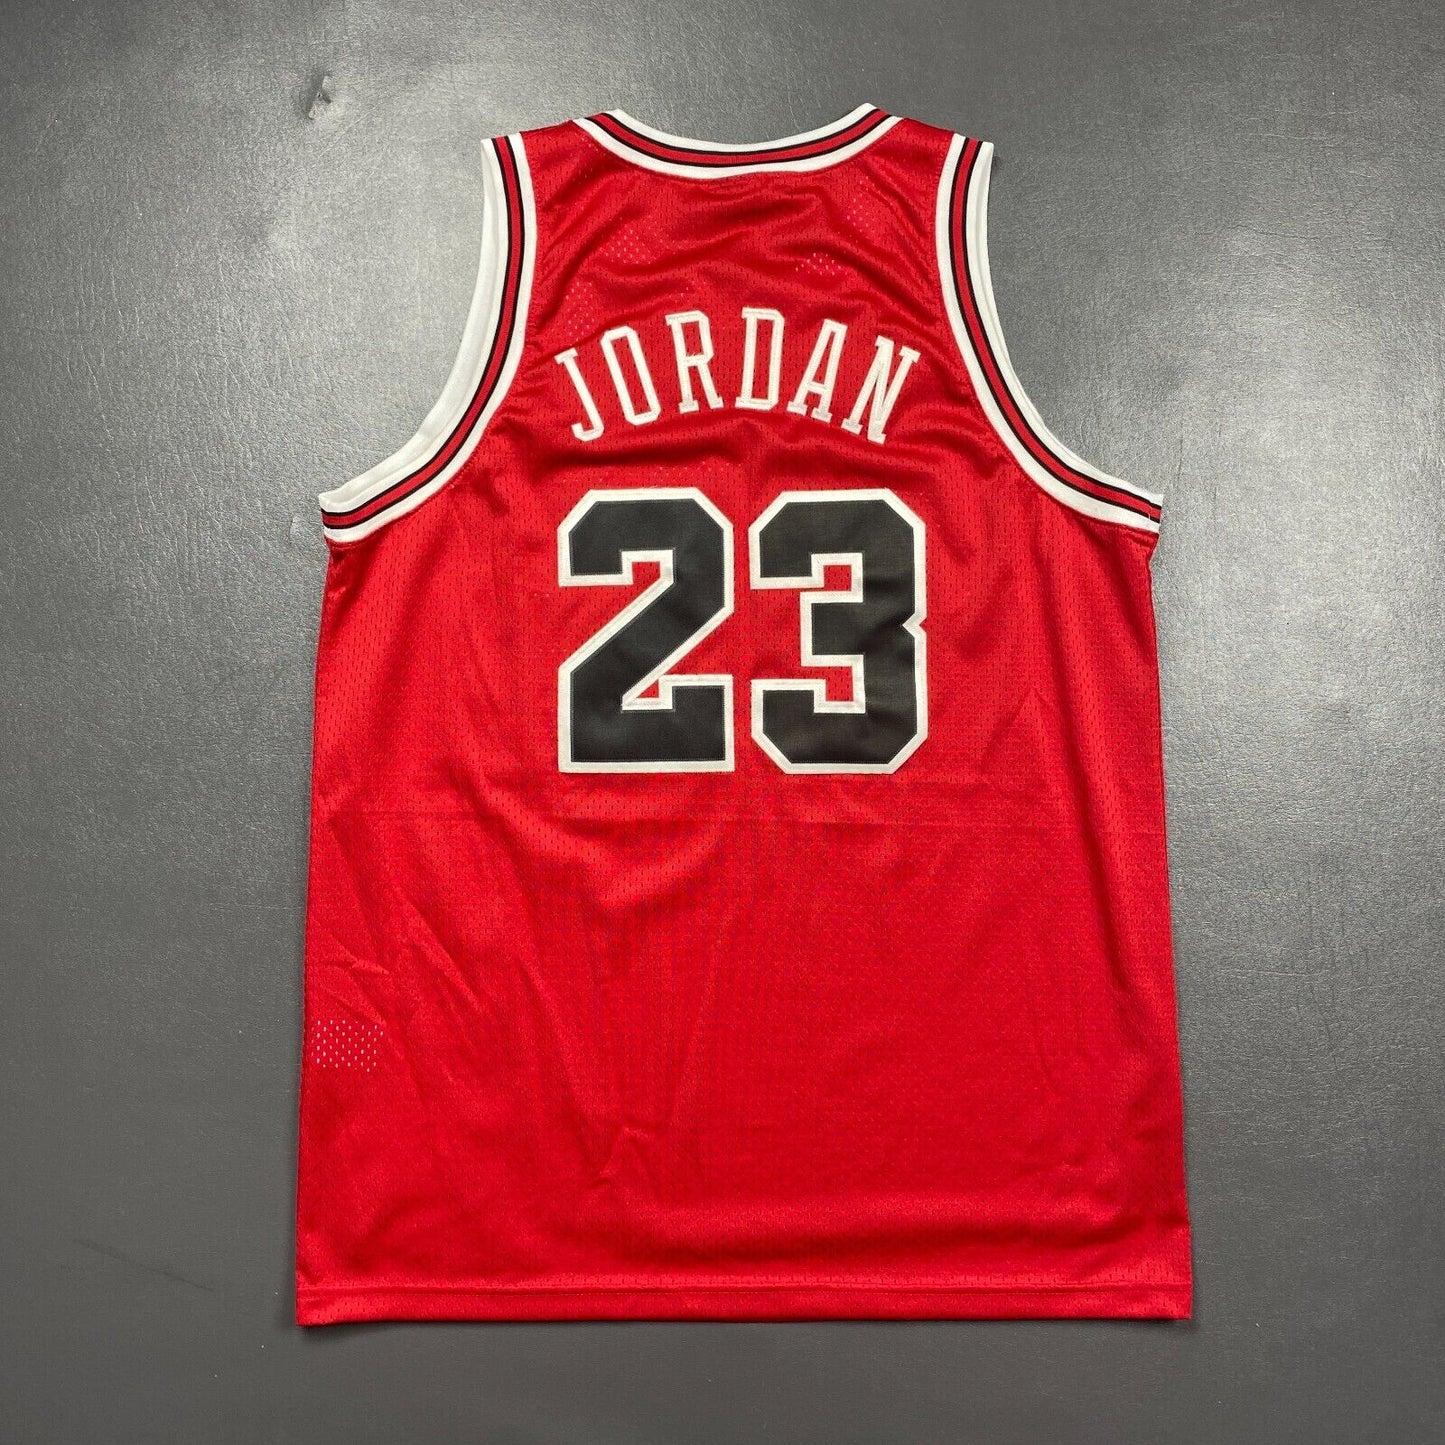 100% Authentic Michael Jordan Vintage Nike 84 85 Bulls Rookie Jersey Size XL 48